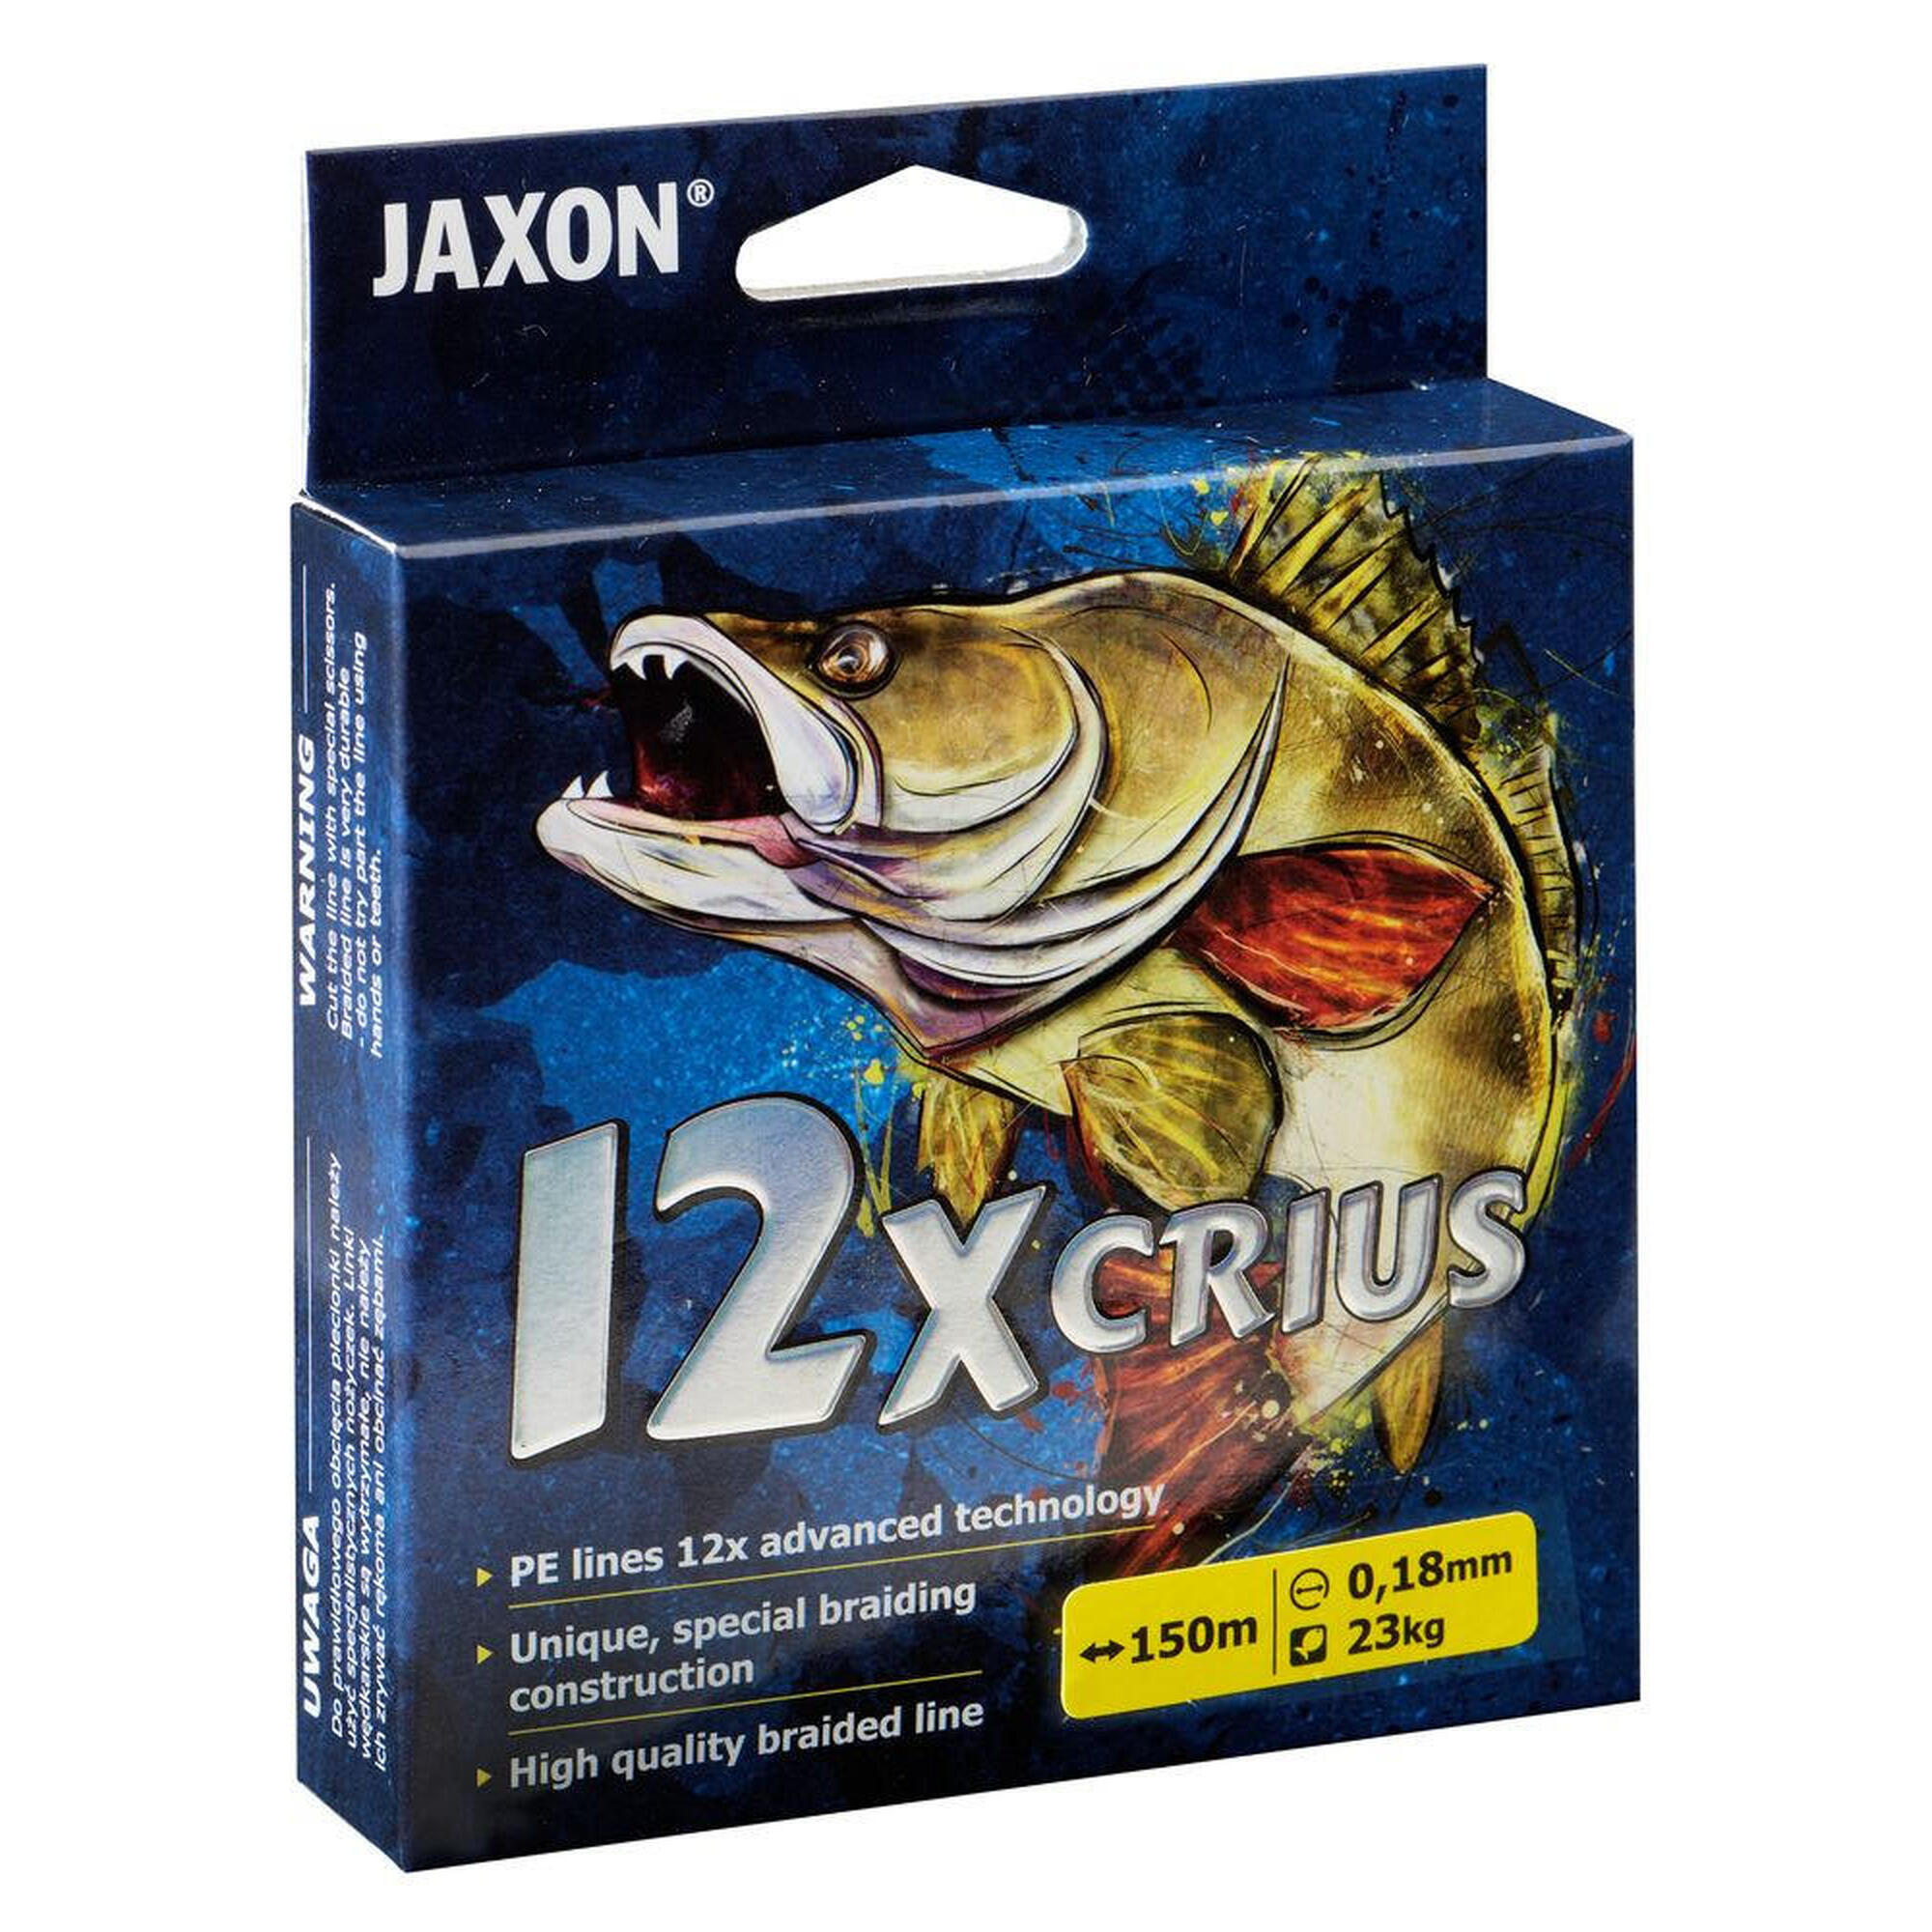 Plecionka Jaxon Crius 12X 0,18mm 150m 23kg Fluo